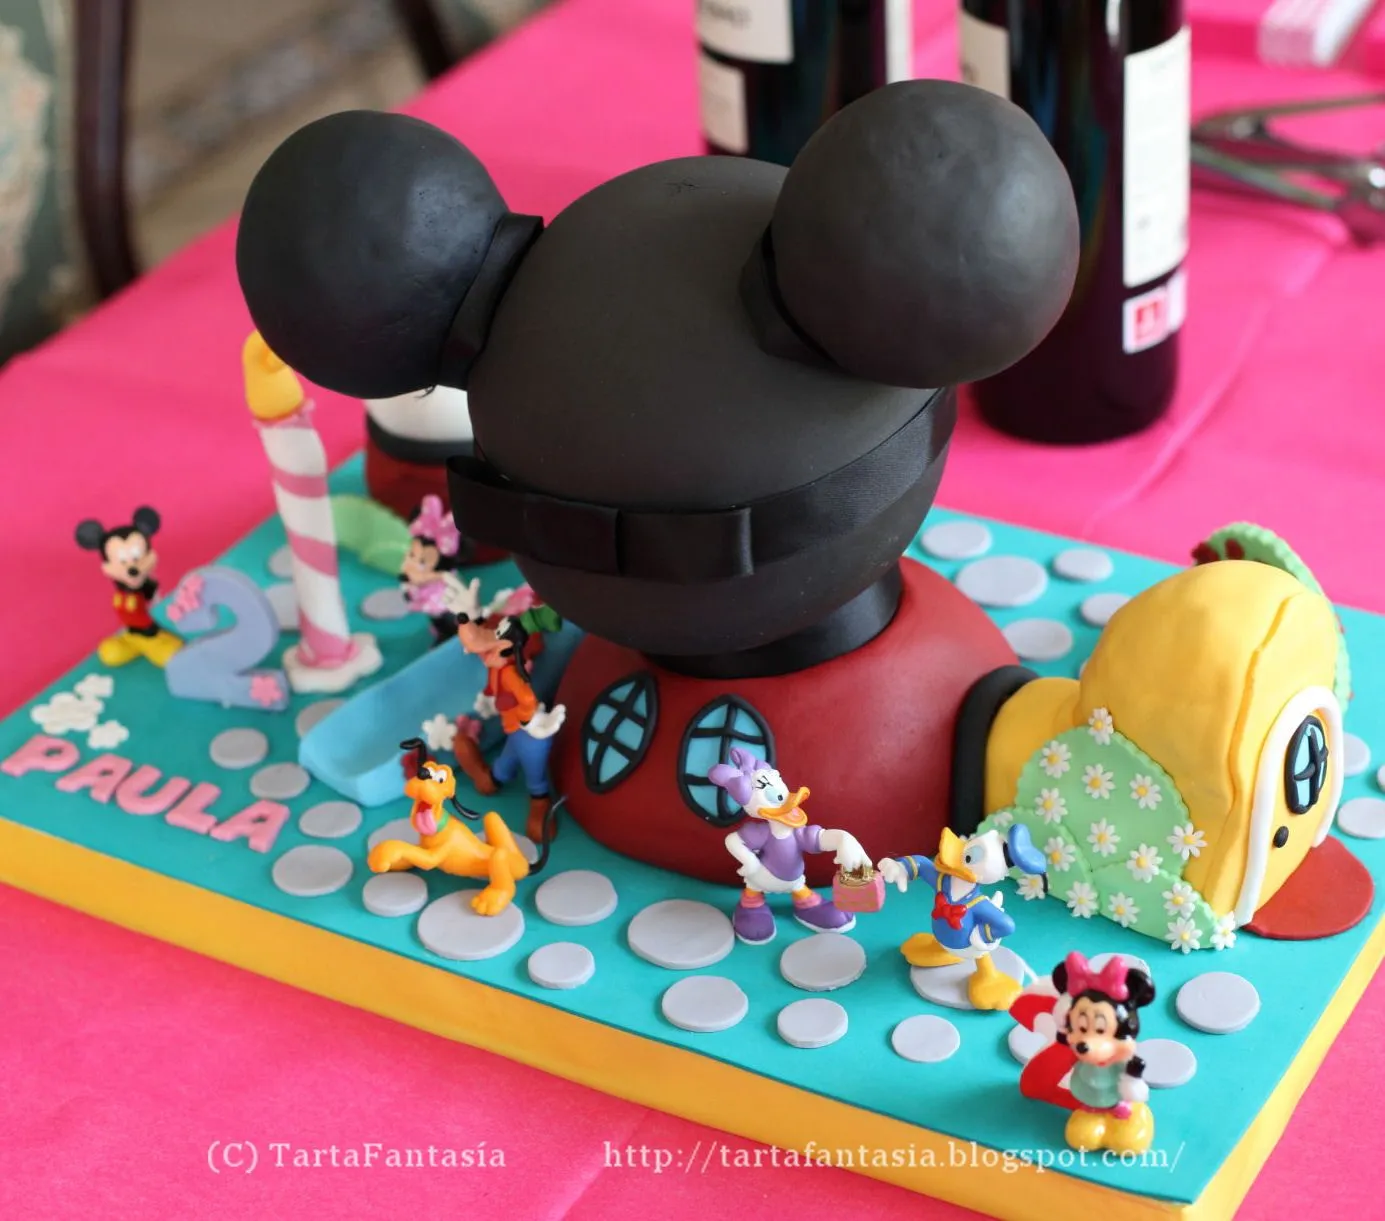 TartaFantasía: Tarta La Casa de Mickey Mouse